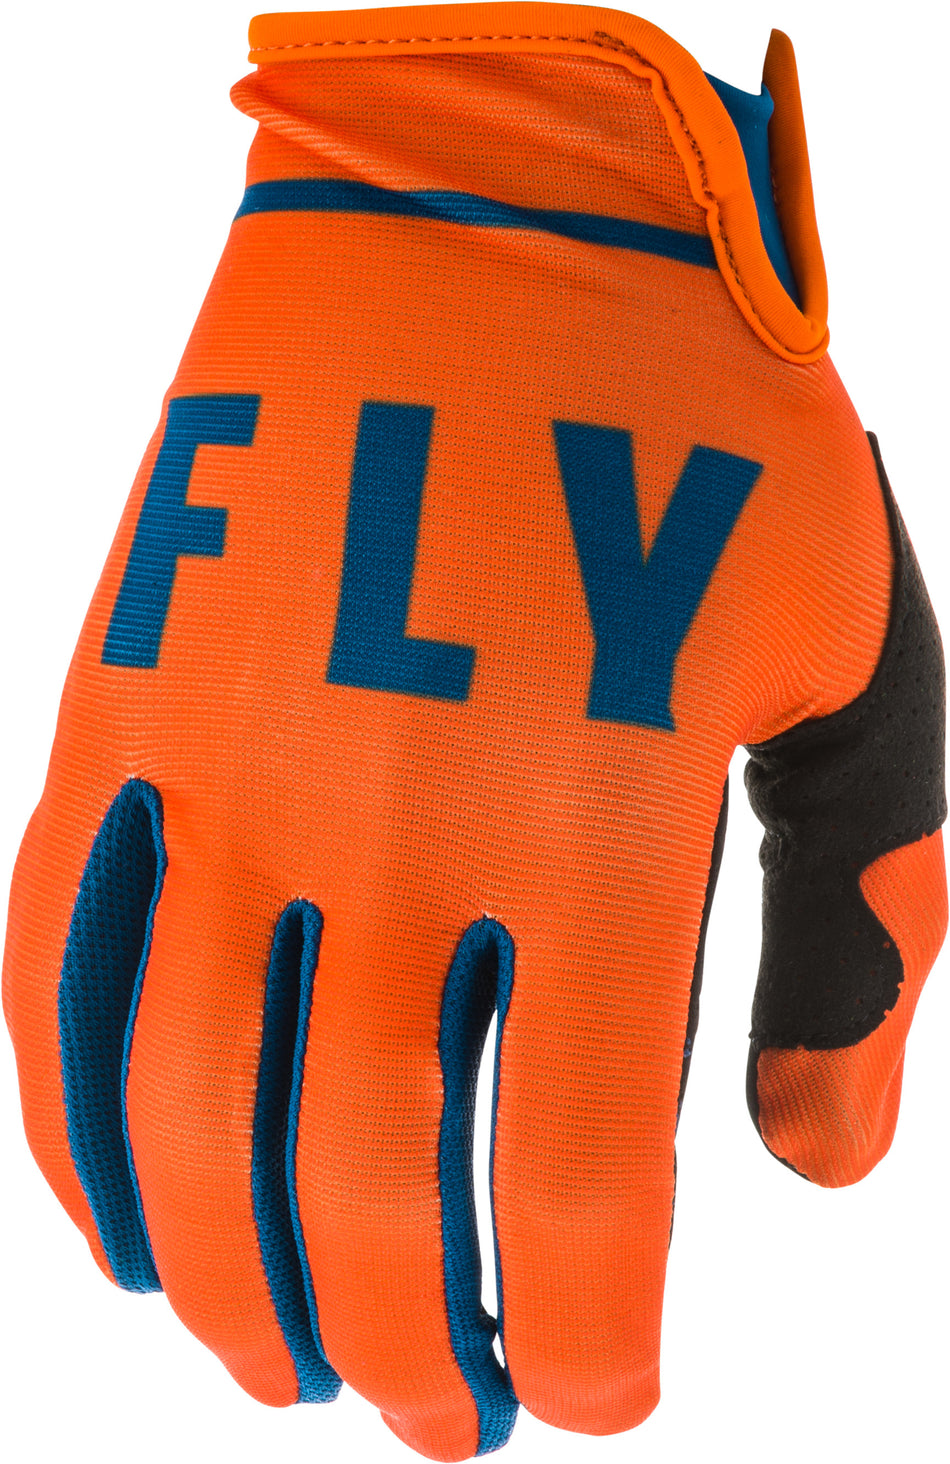 FLY RACING Lite Gloves Orange/Navy Sz 07 373-71307